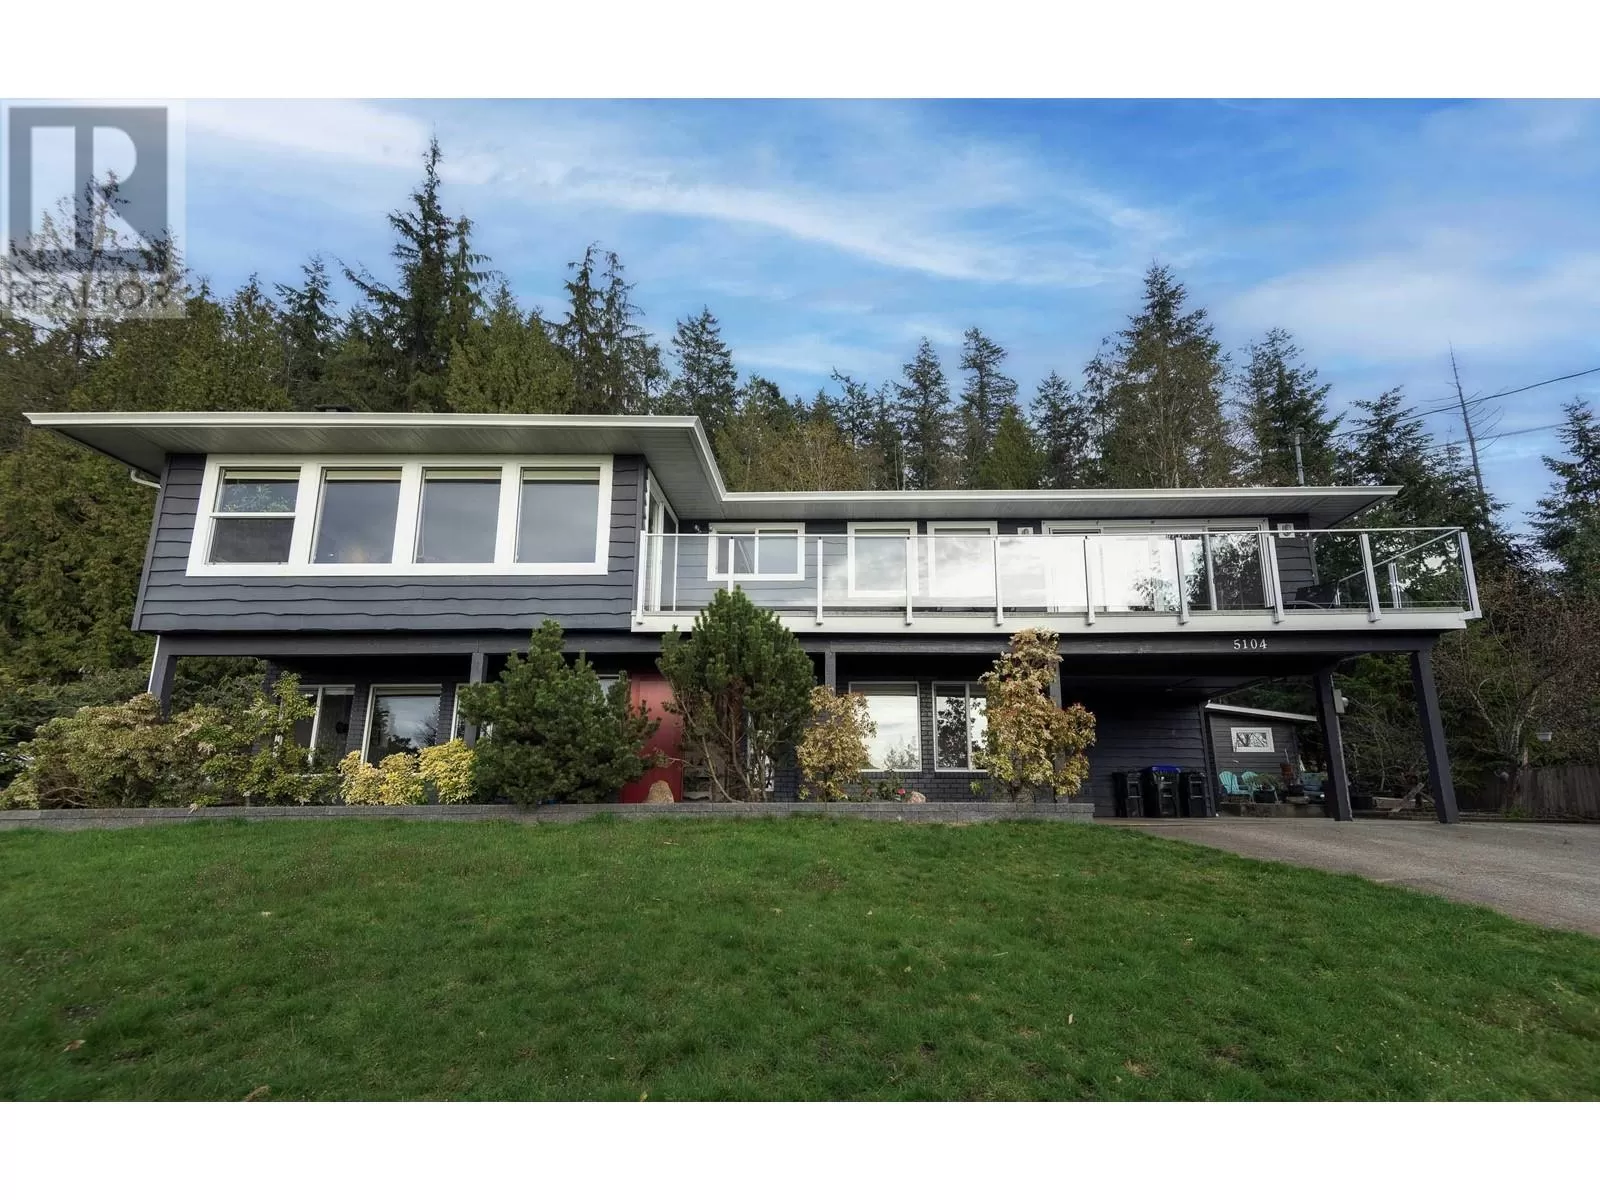 House for rent: 5104 Pam Road, Sechelt, British Columbia V7Z 0G6